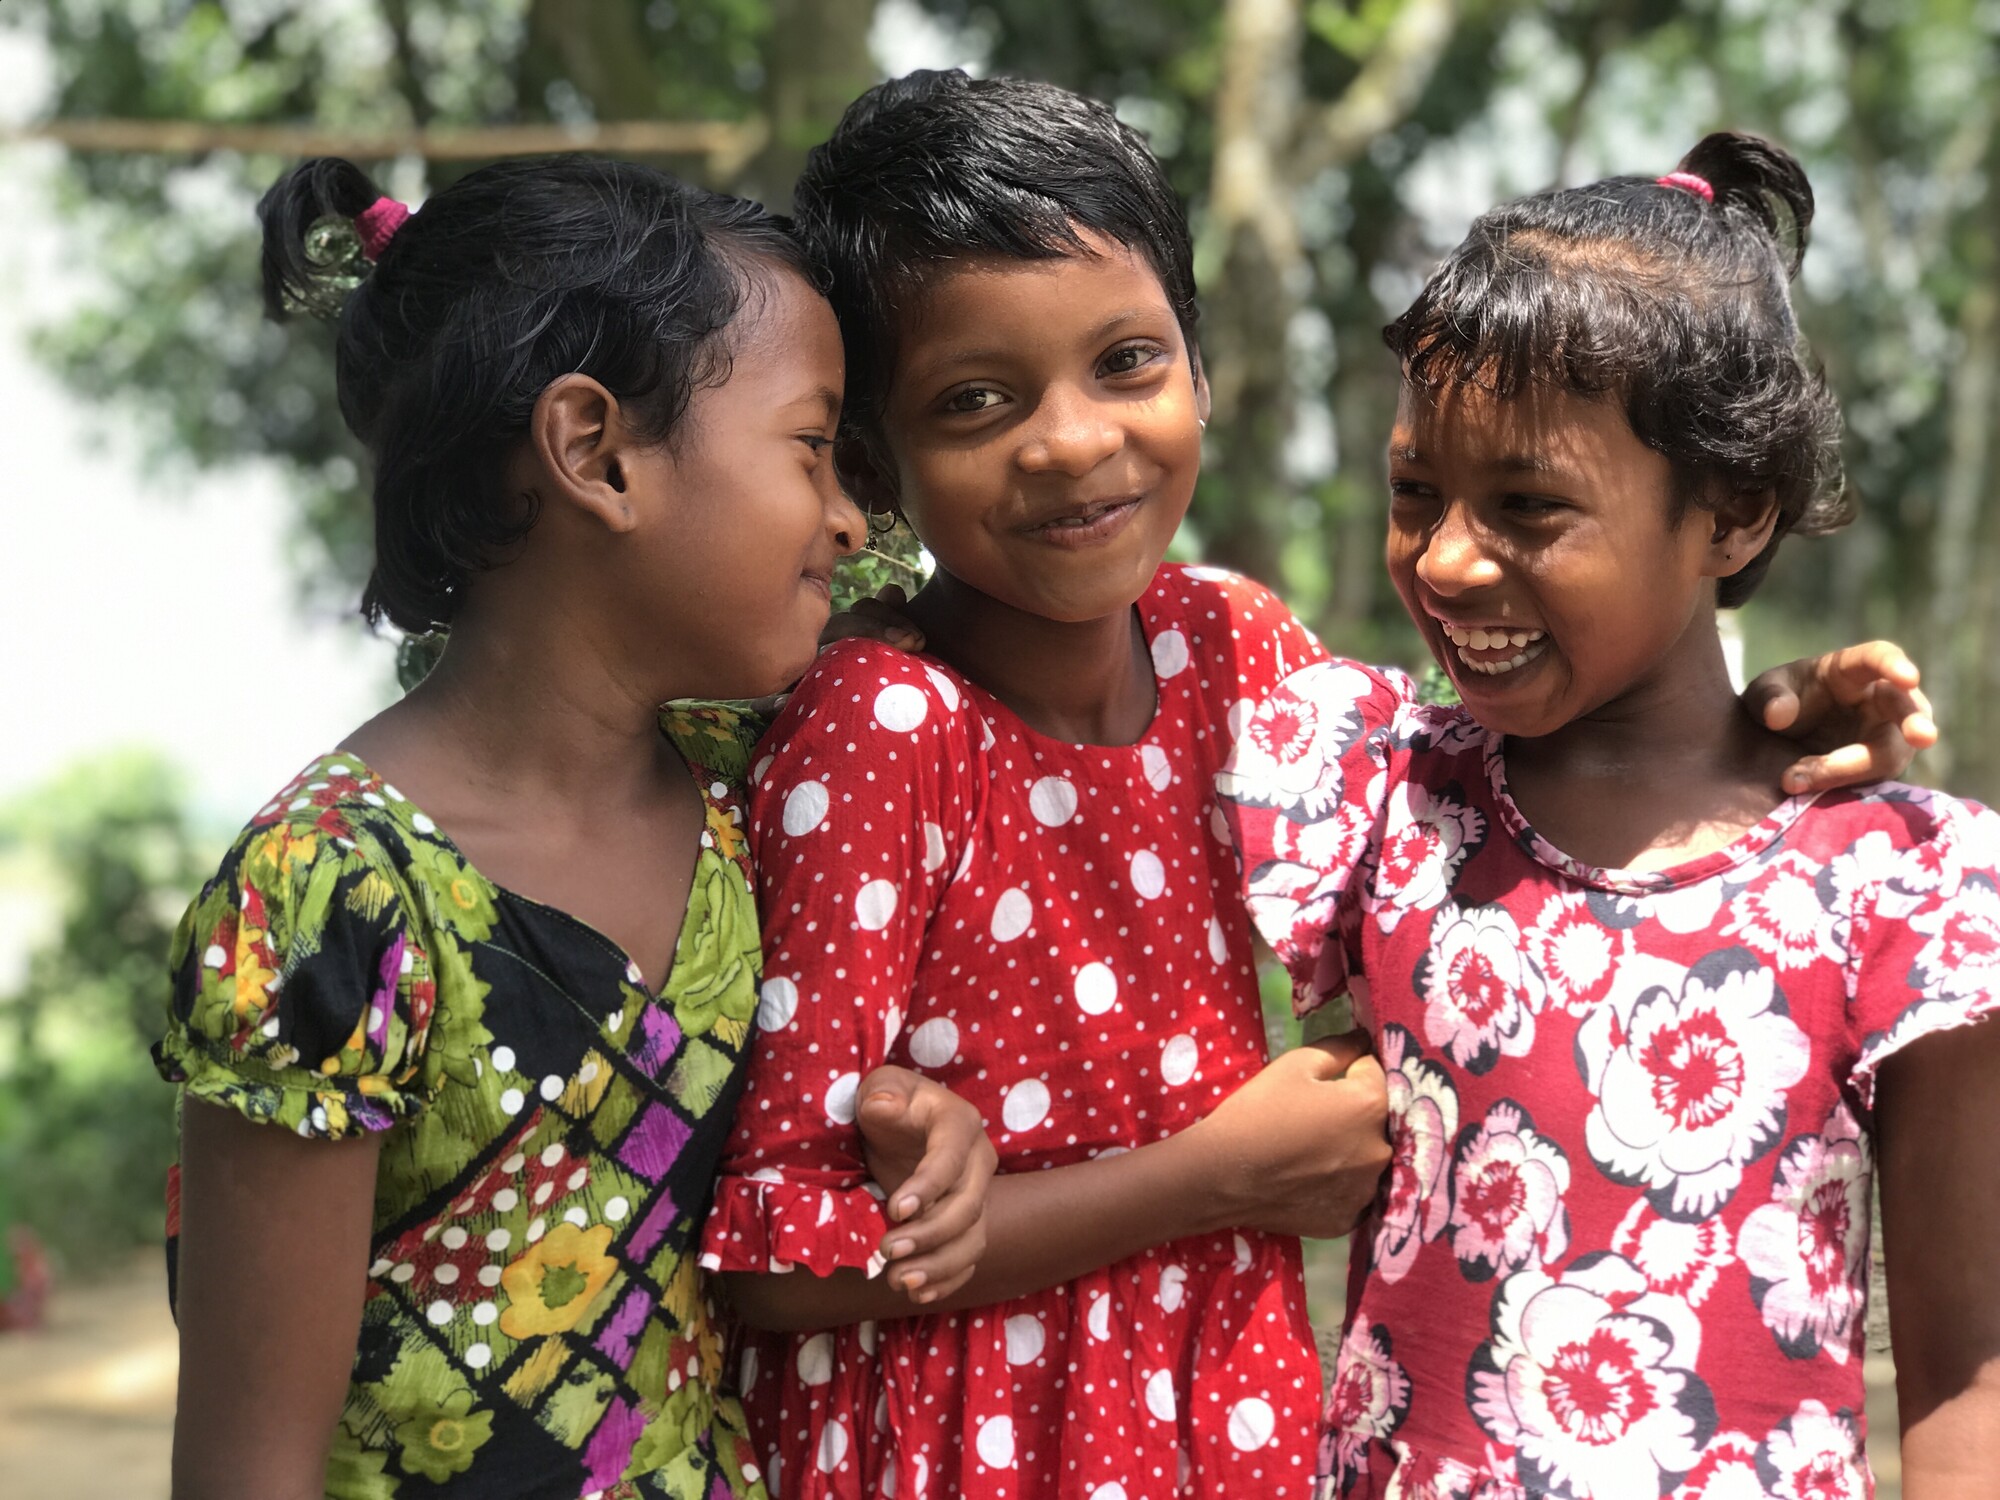 three children in Bangladesh